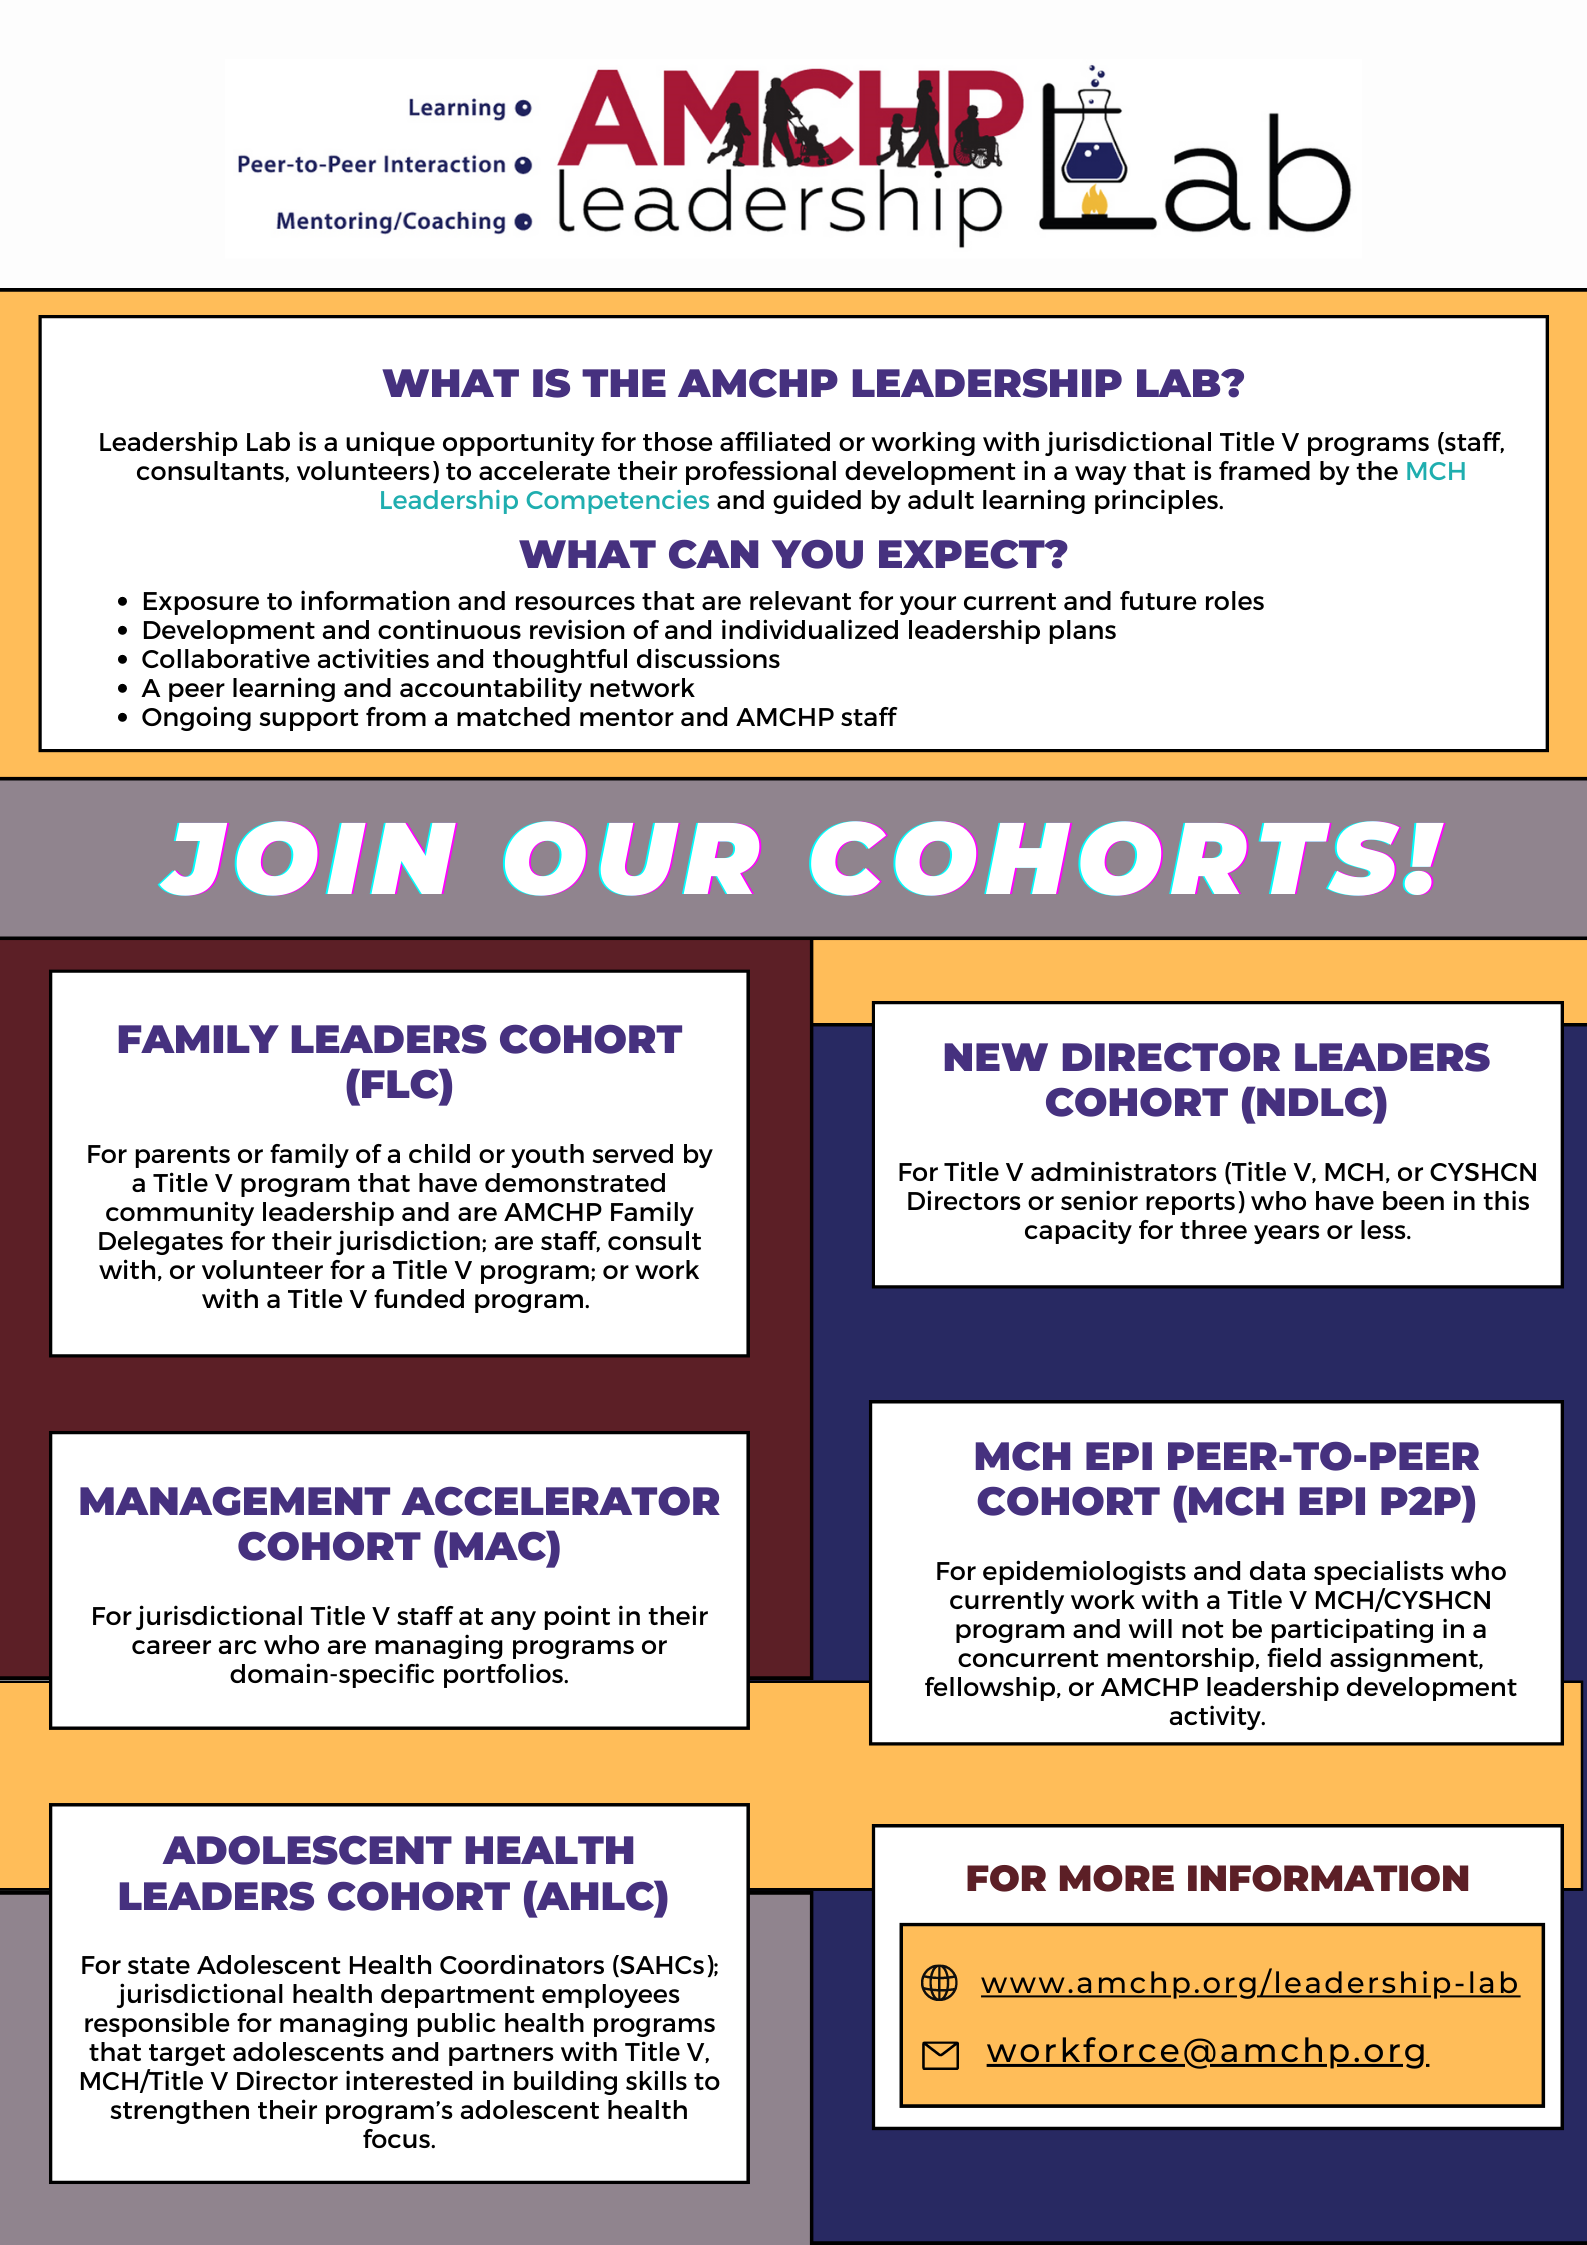 Leadership Lab flyer describing the five cohorts. More at amchp.org/leadership-lab